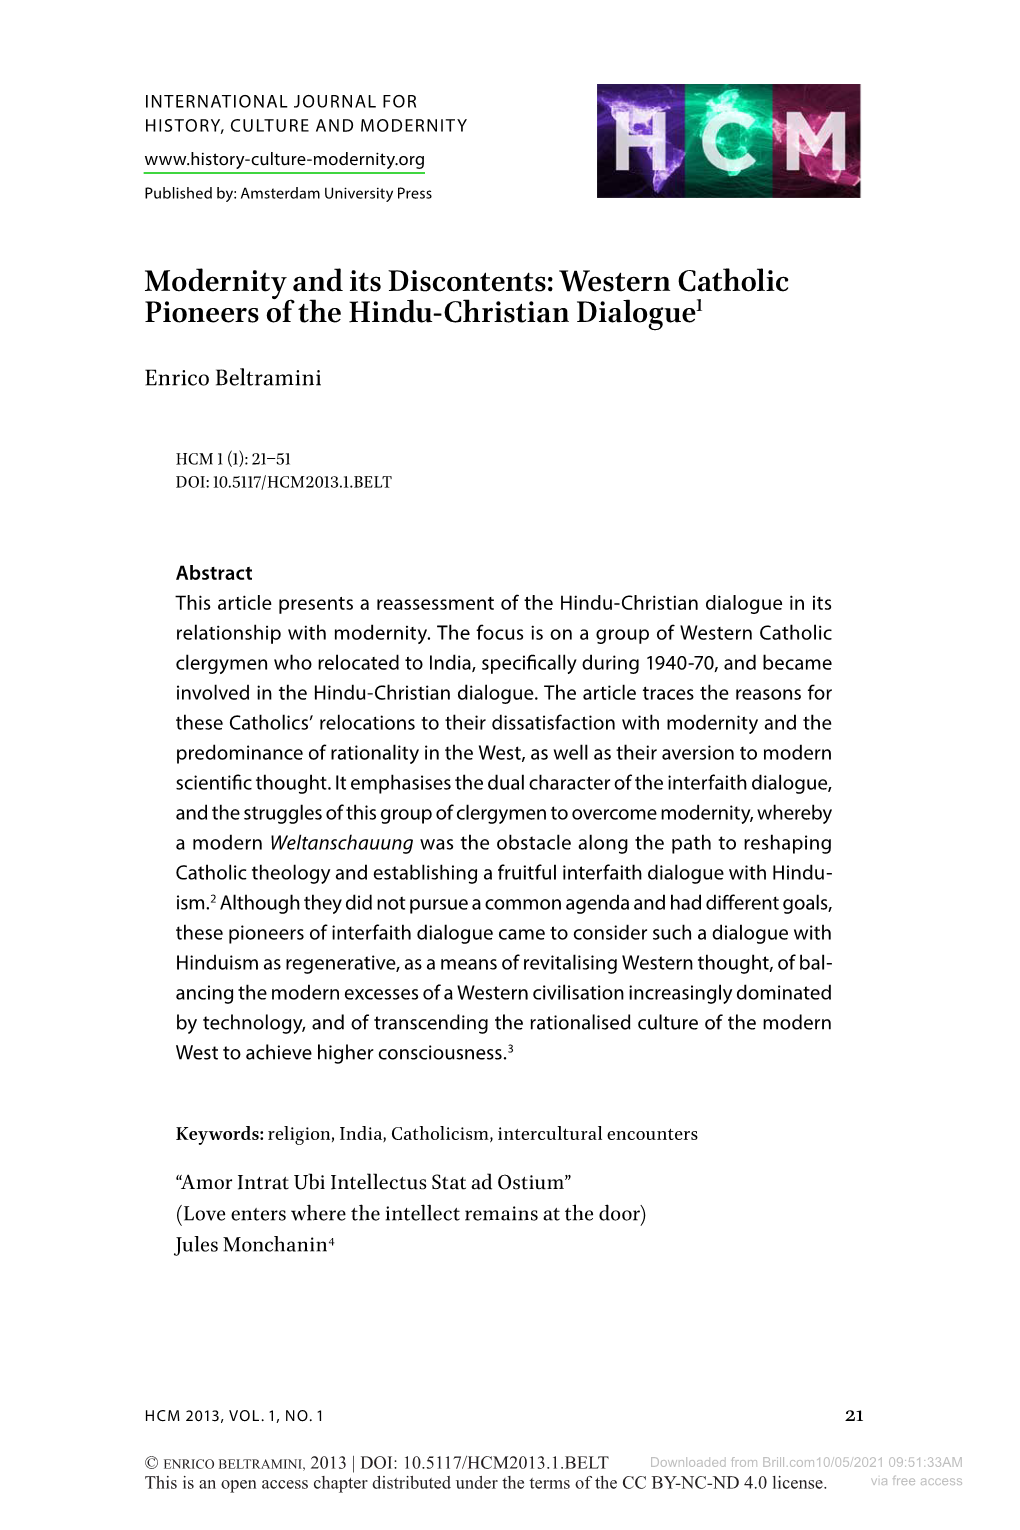 Western Catholic Pioneers of the Hindu-Christian Dialogue1